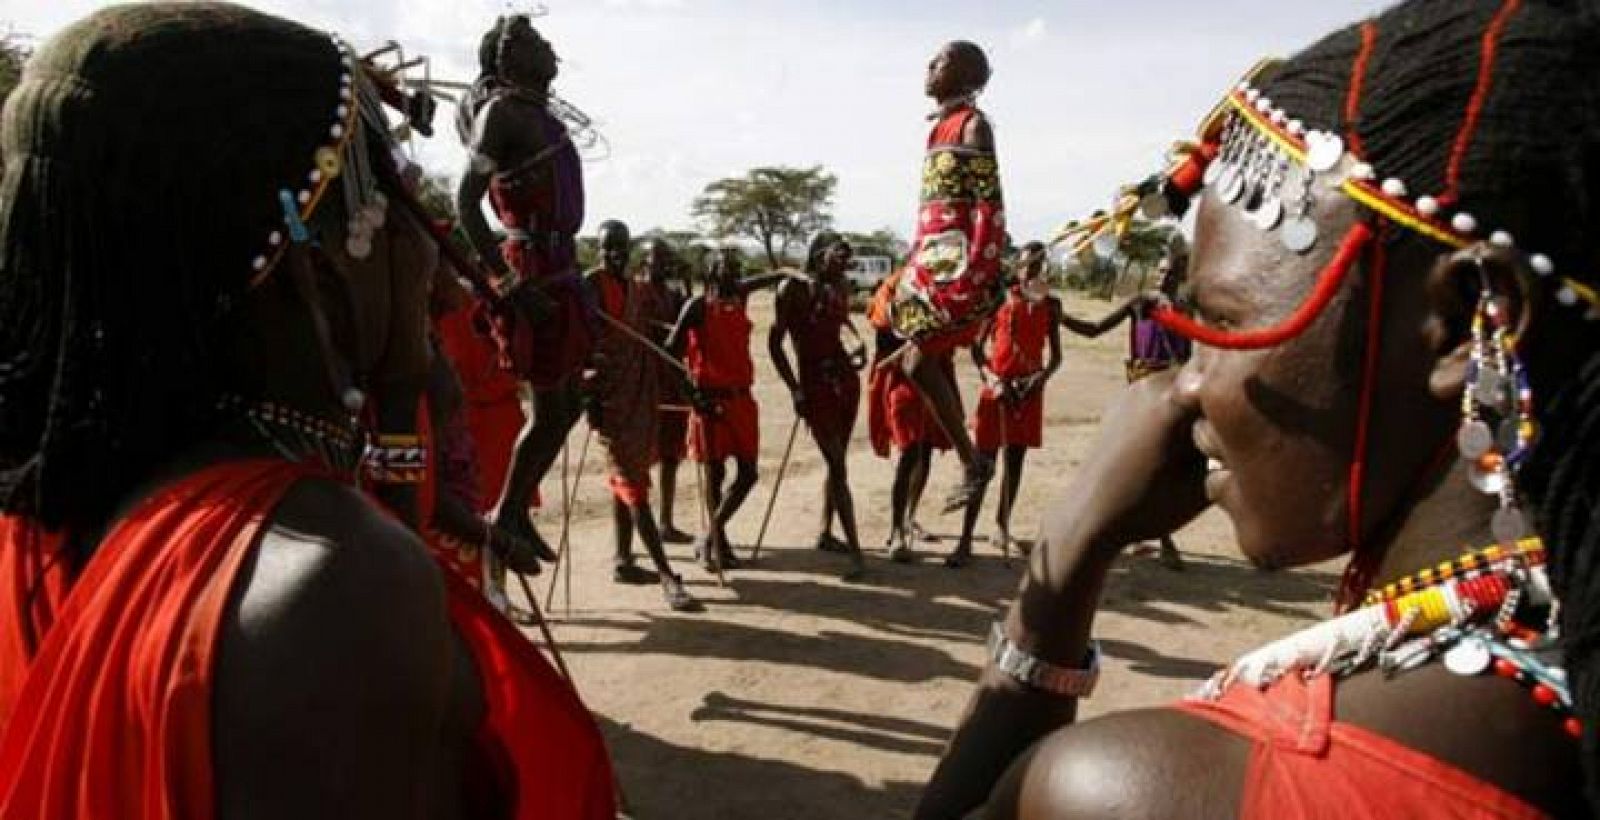 Danza tradicional de los masai en Sekenani